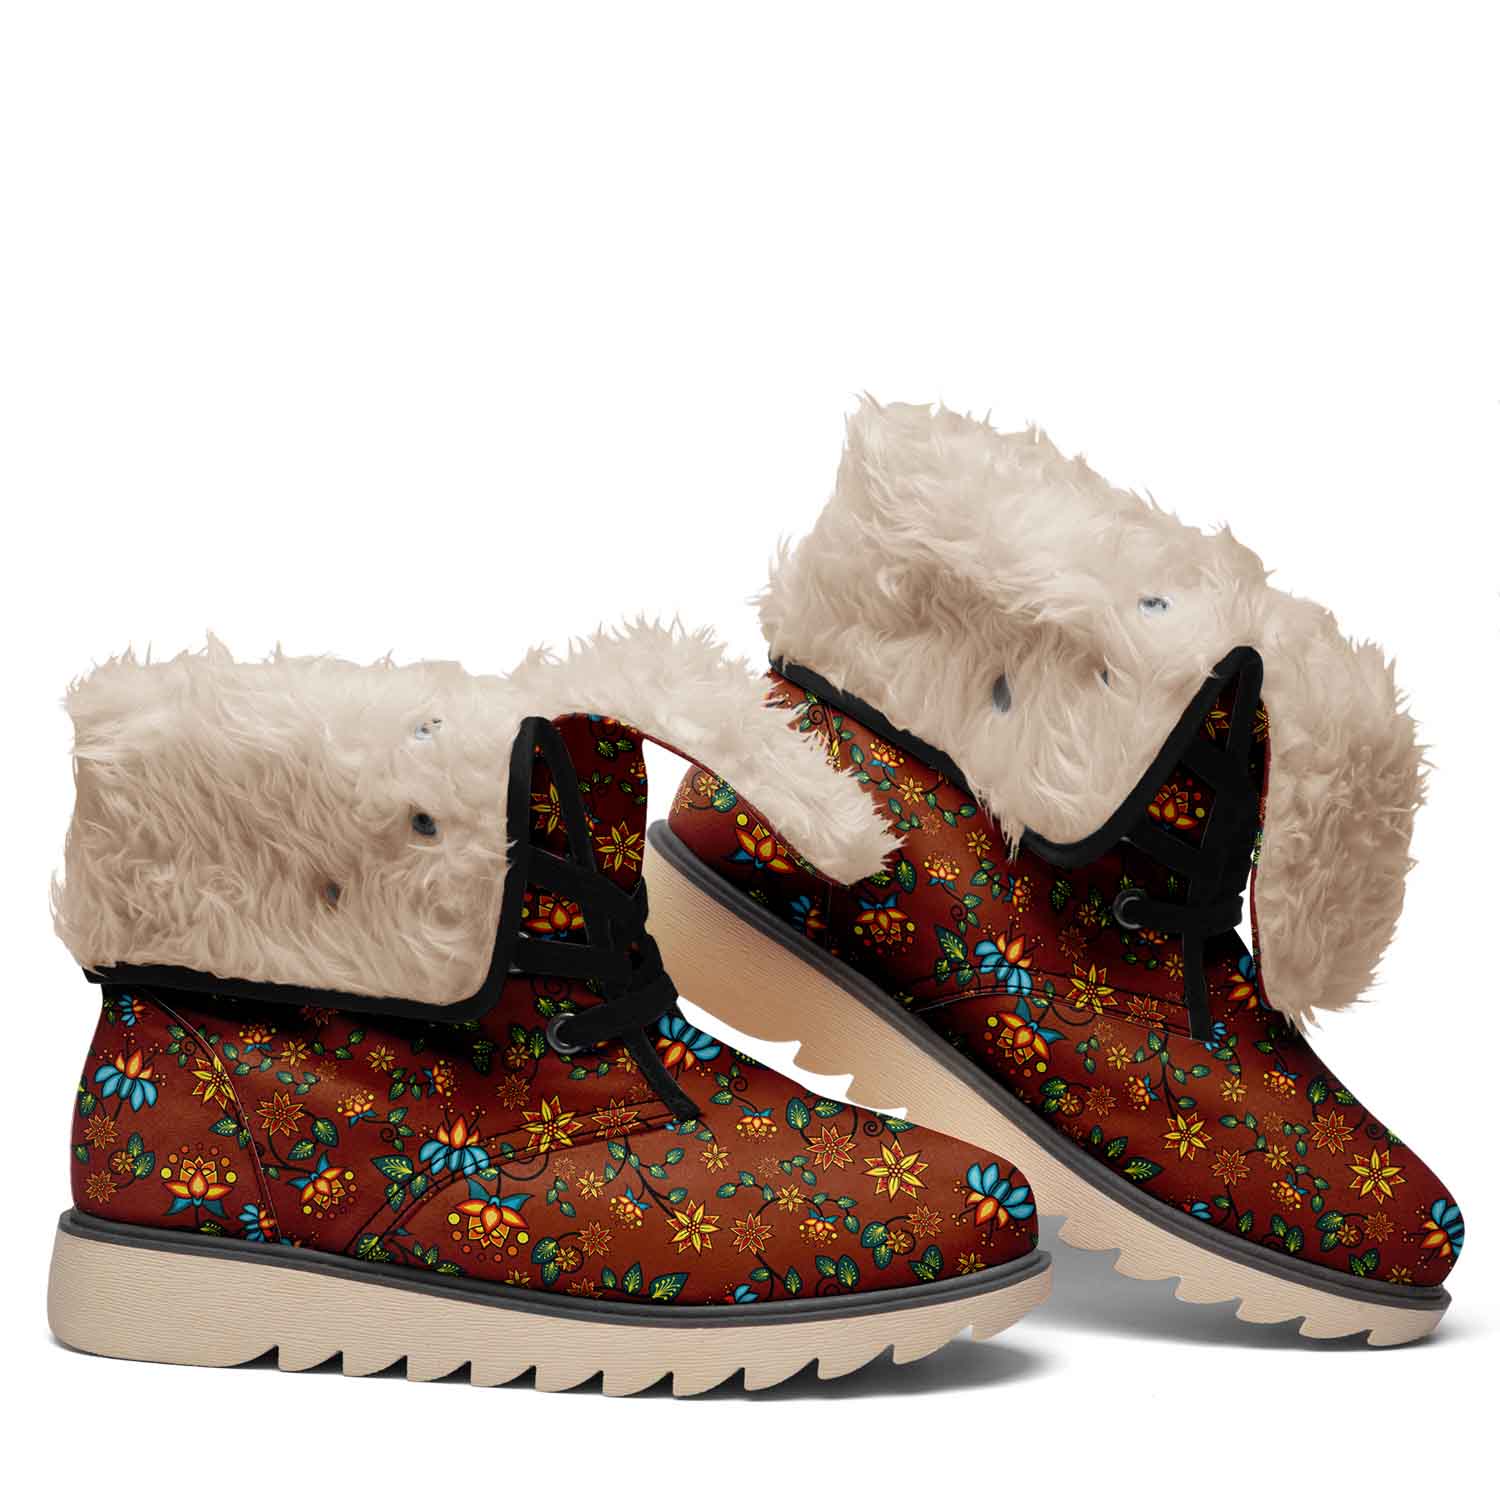 Lily Sierra Polar Winter Boots